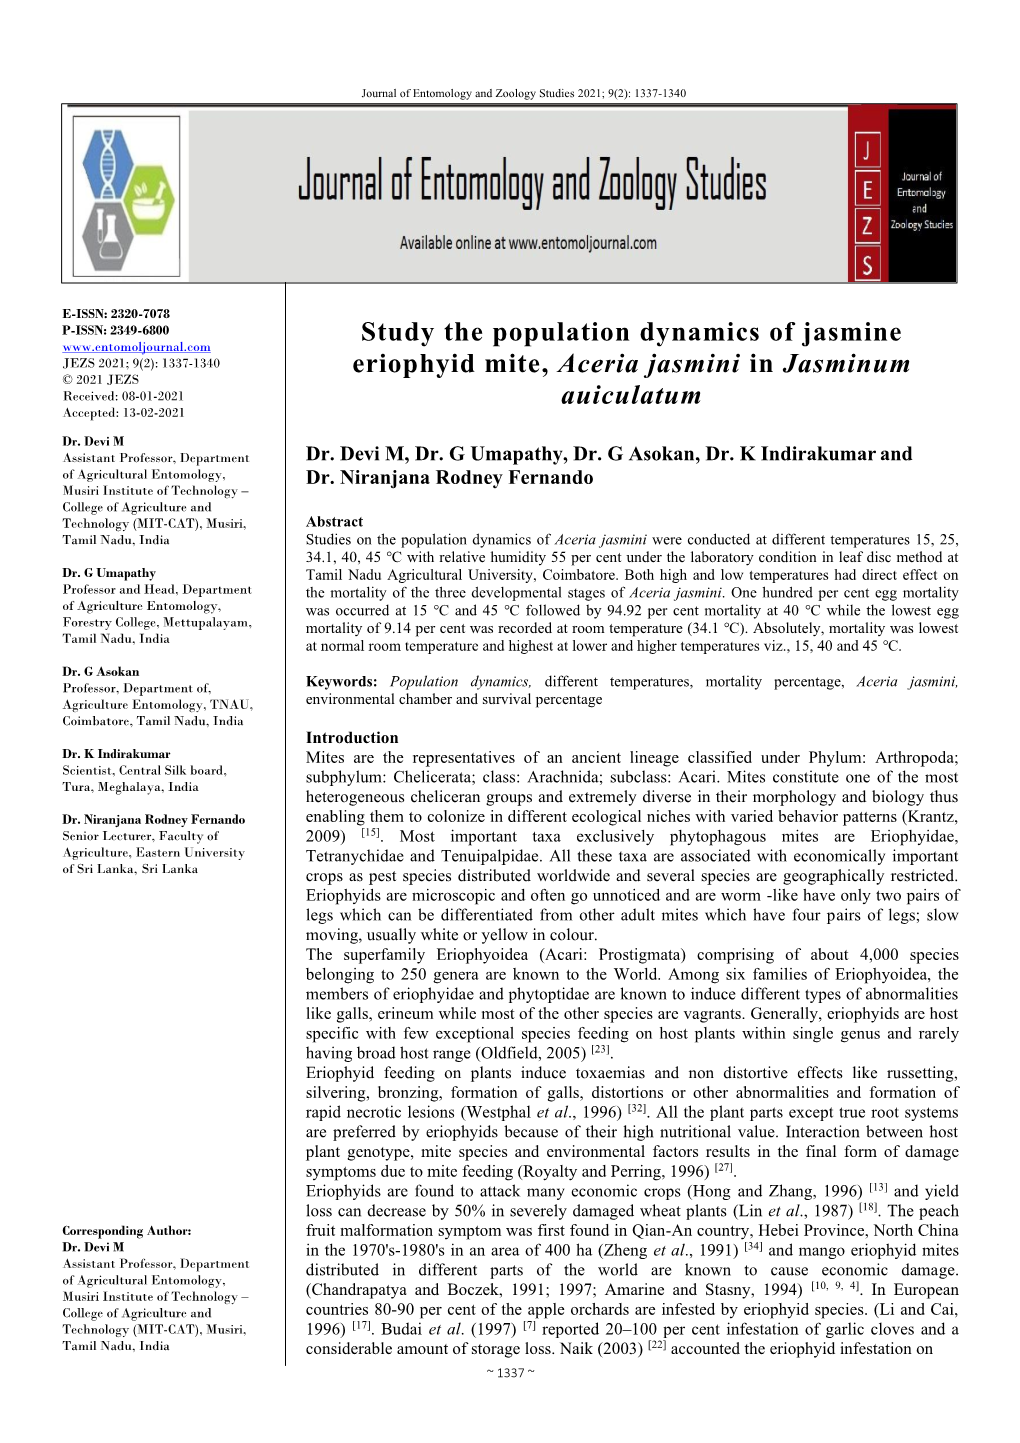 Study the Population Dynamics of Jasmine Eriophyid Mite, Aceria